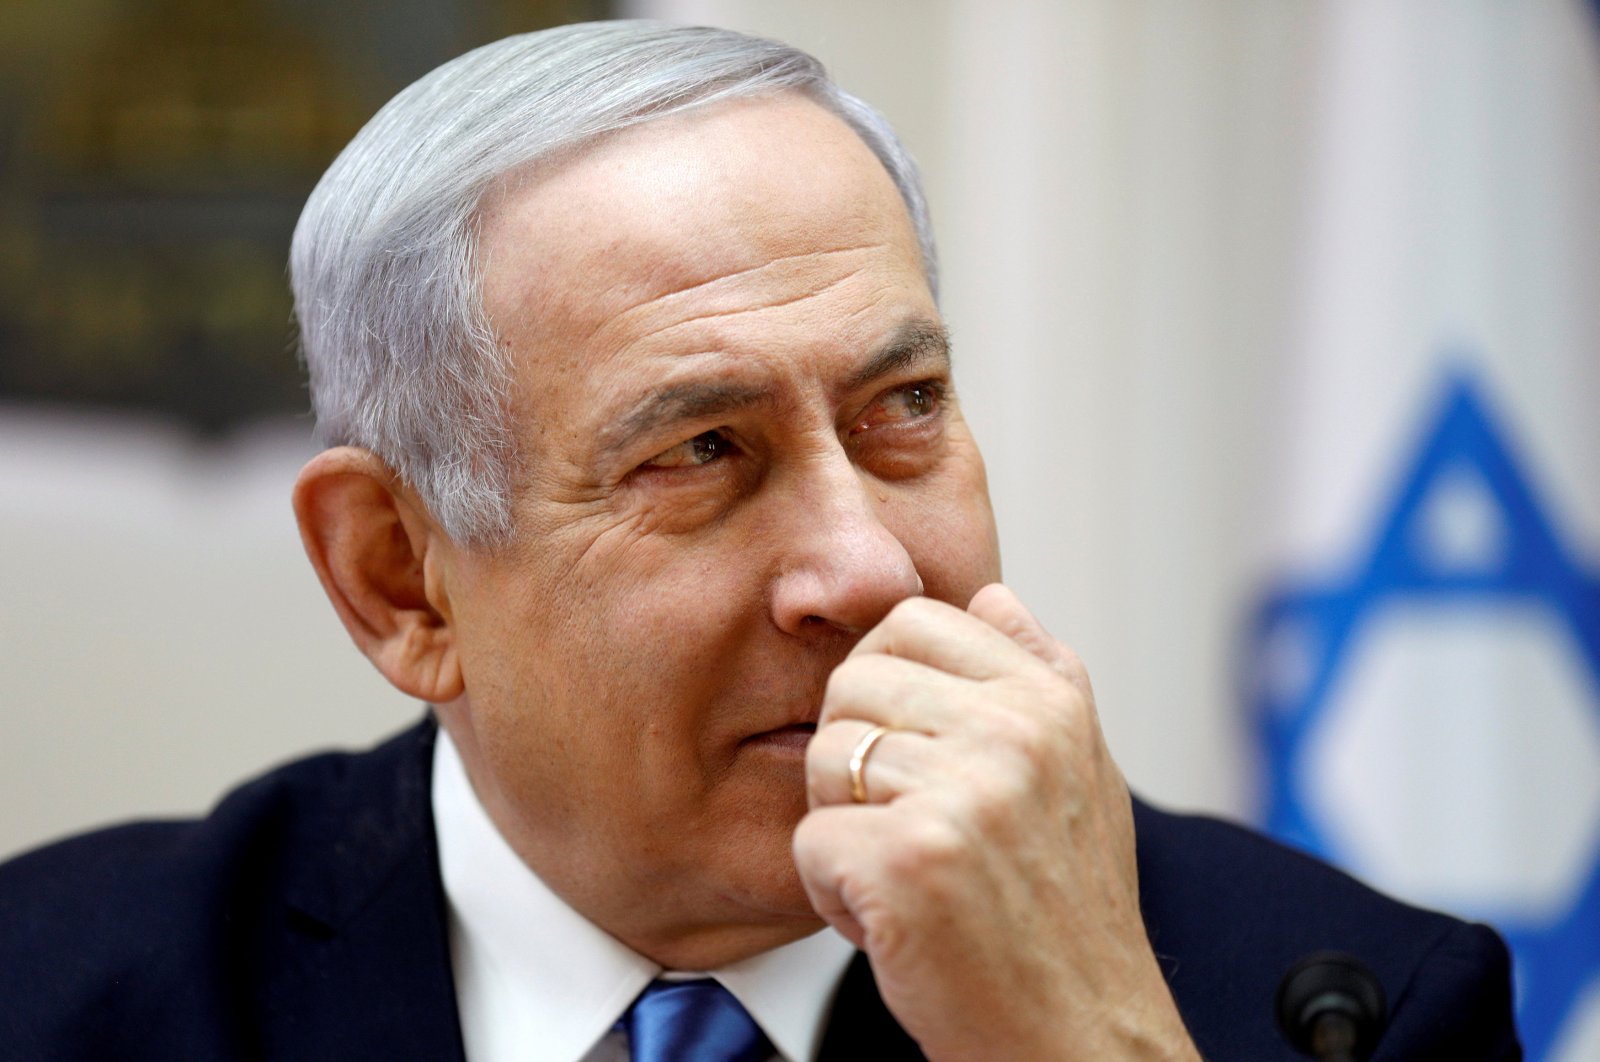 Israeli Prime Minister Benjamin Netanyahu attends the weekly Cabinet meeting in Jerusalem, Israel, March 10, 2019. (Reuters Photo)